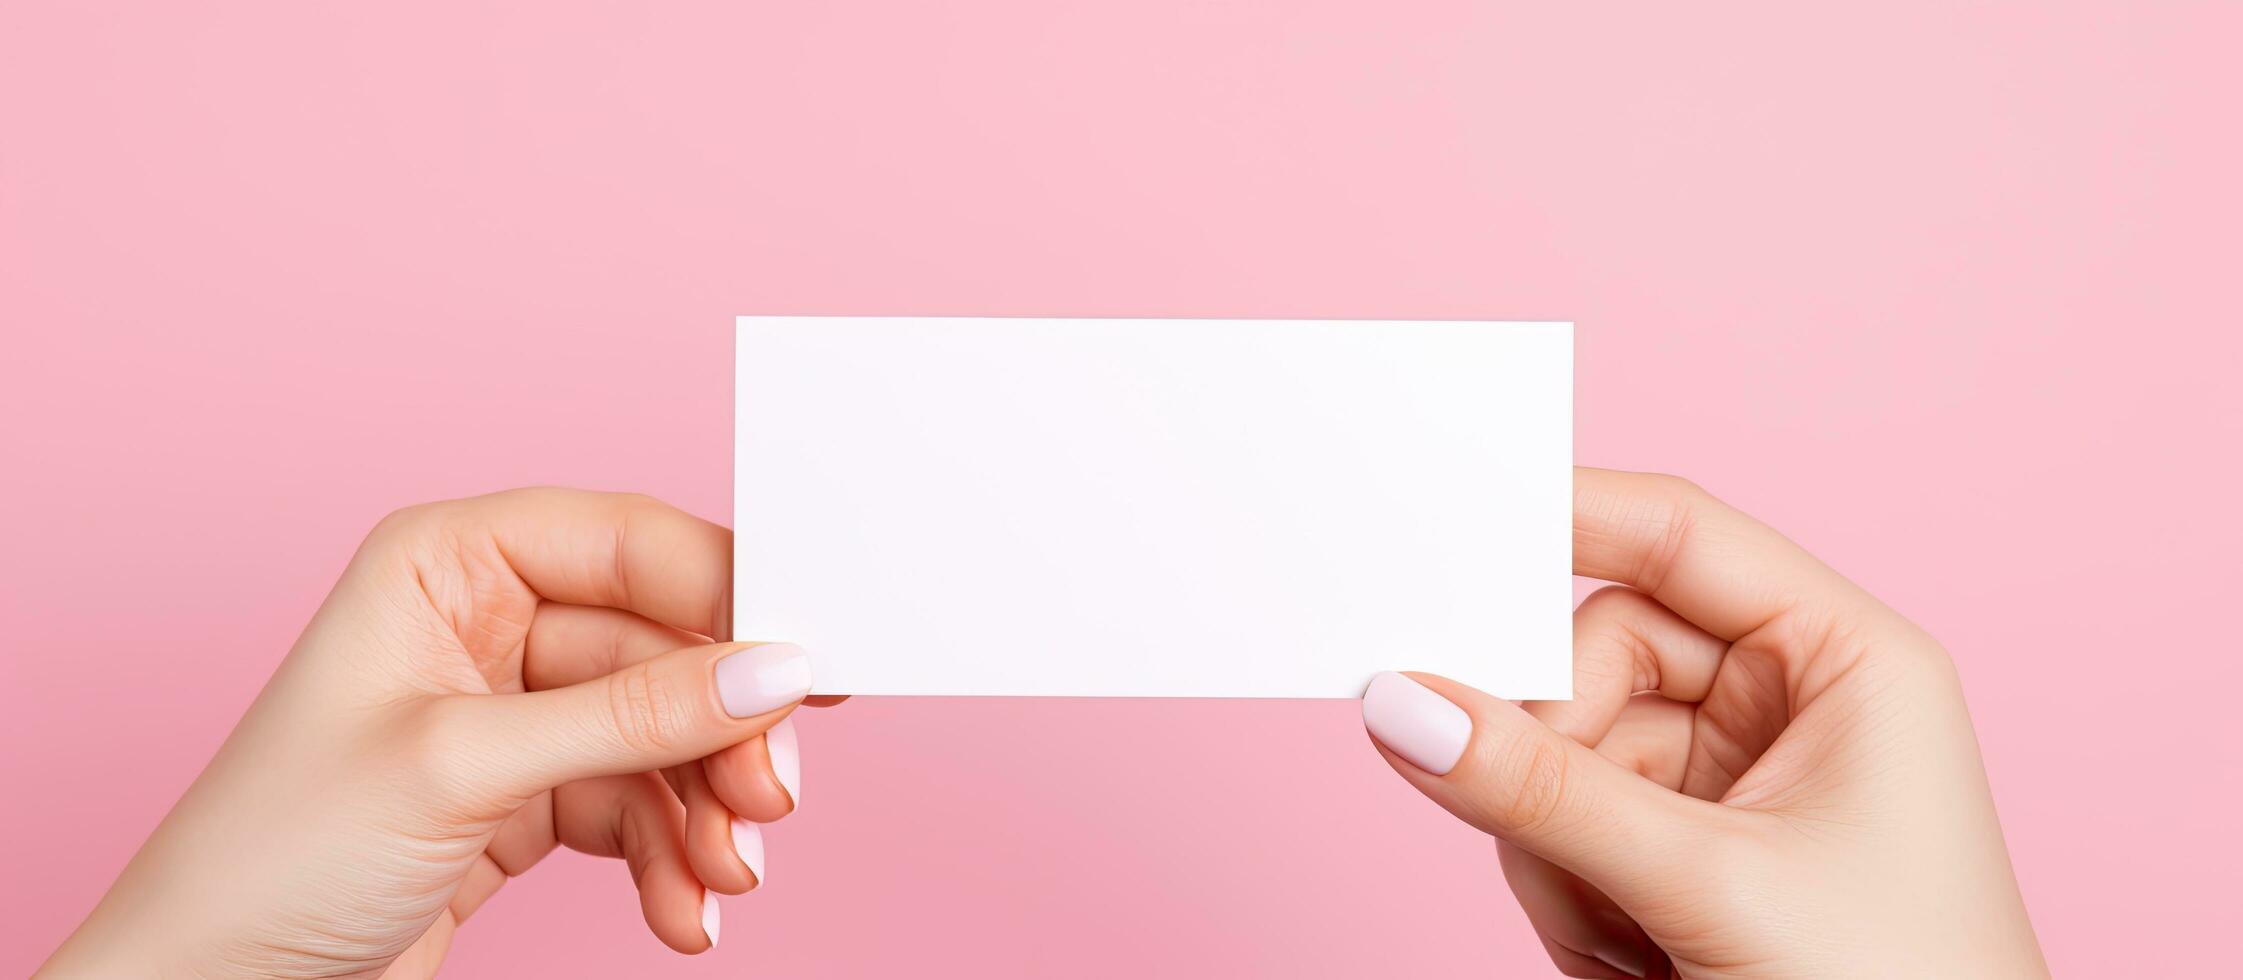 caucásico mujer participación negocio tarjeta en rosado antecedentes representando negocio papelería concepto foto